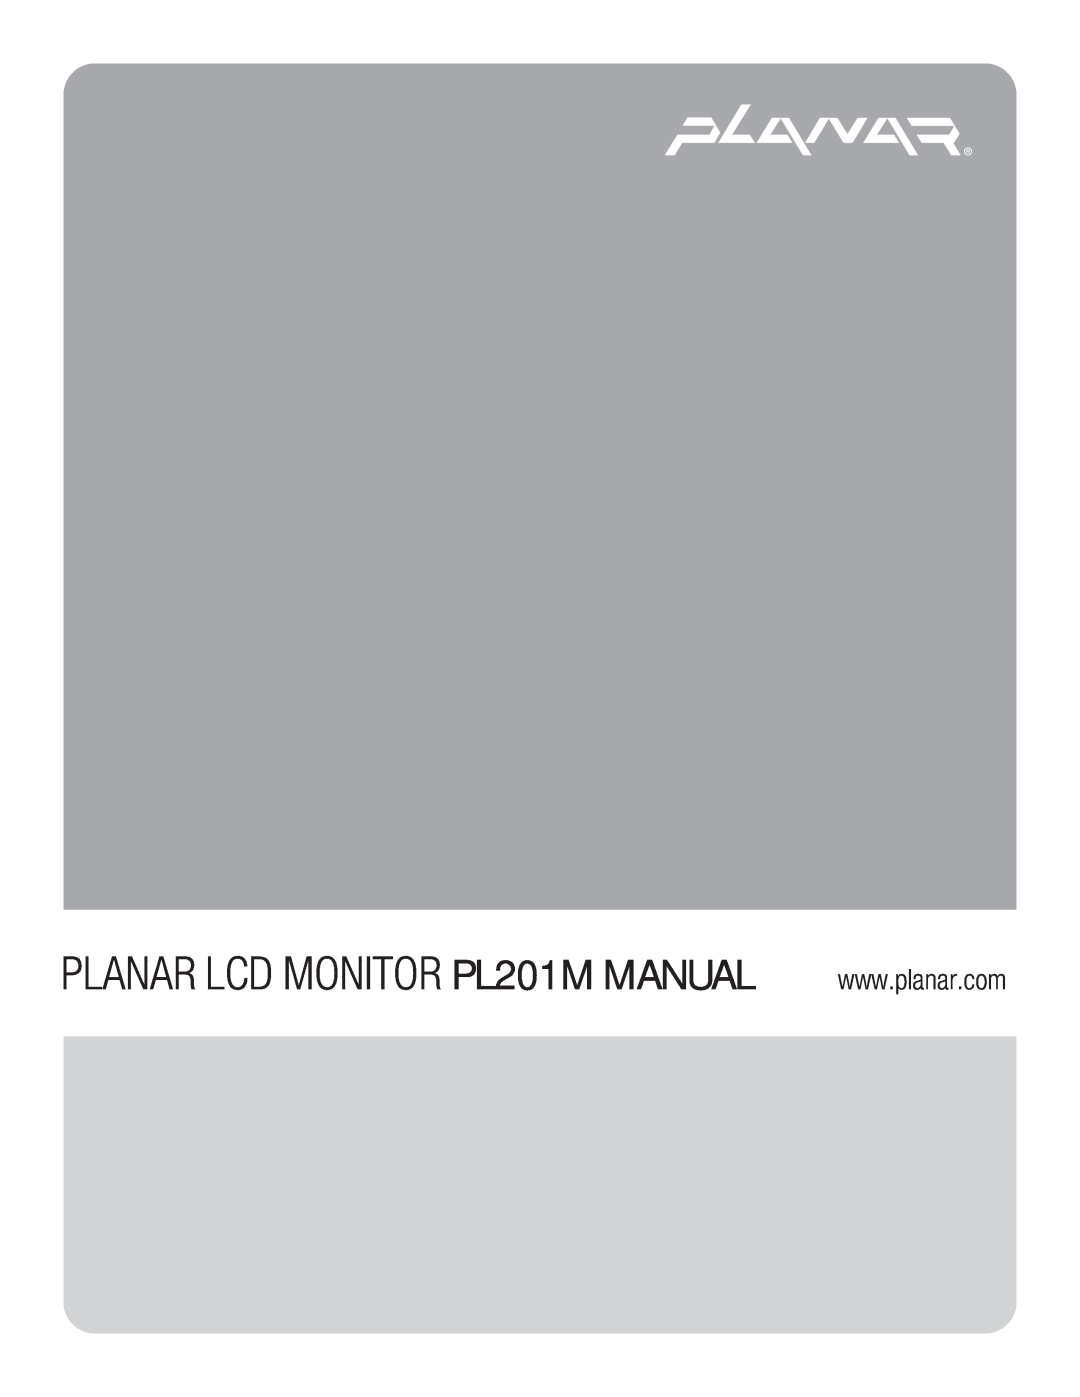 Planar manual PLANAR LCD MONITOR PL201M MANUAL 